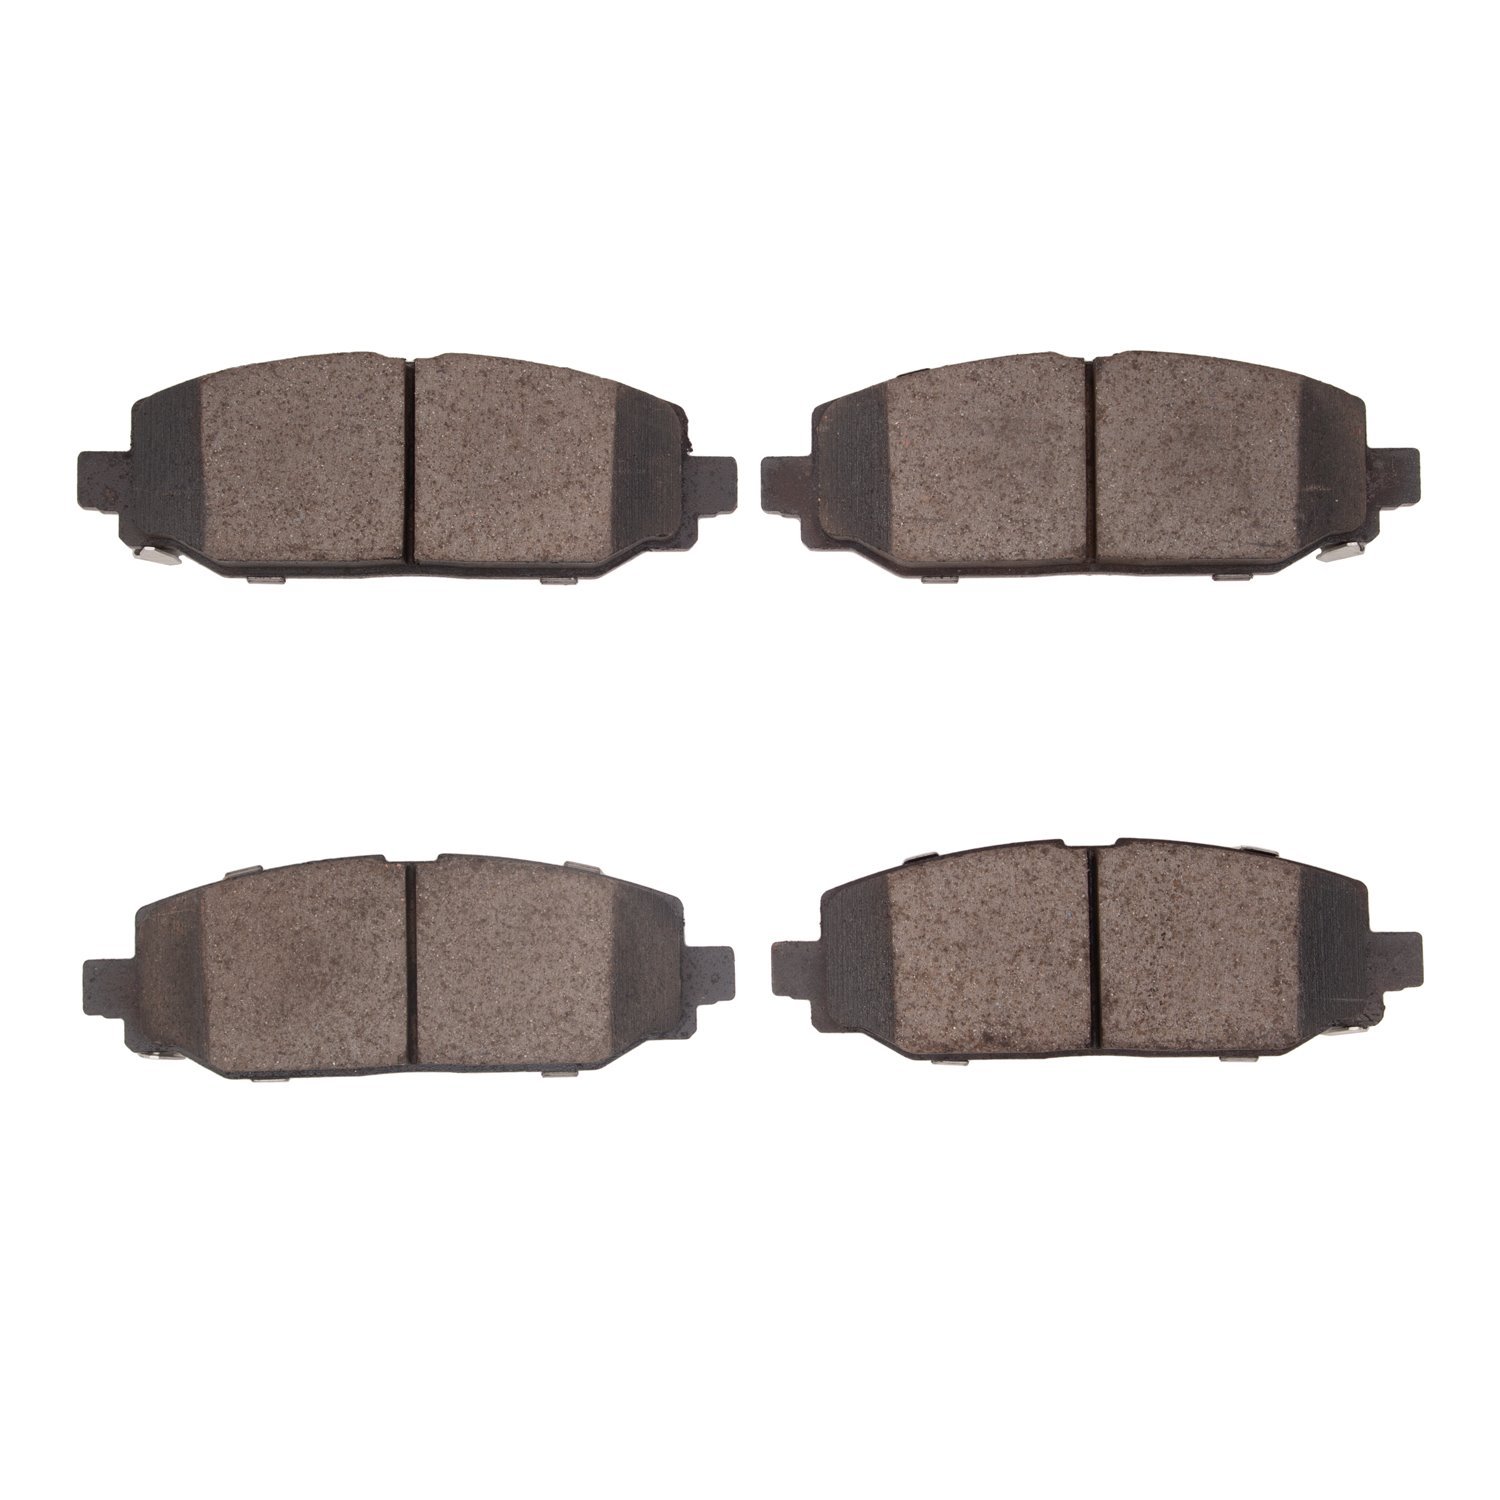 Ceramic Brake Pads, Fits Select Mopar, Position: Rear